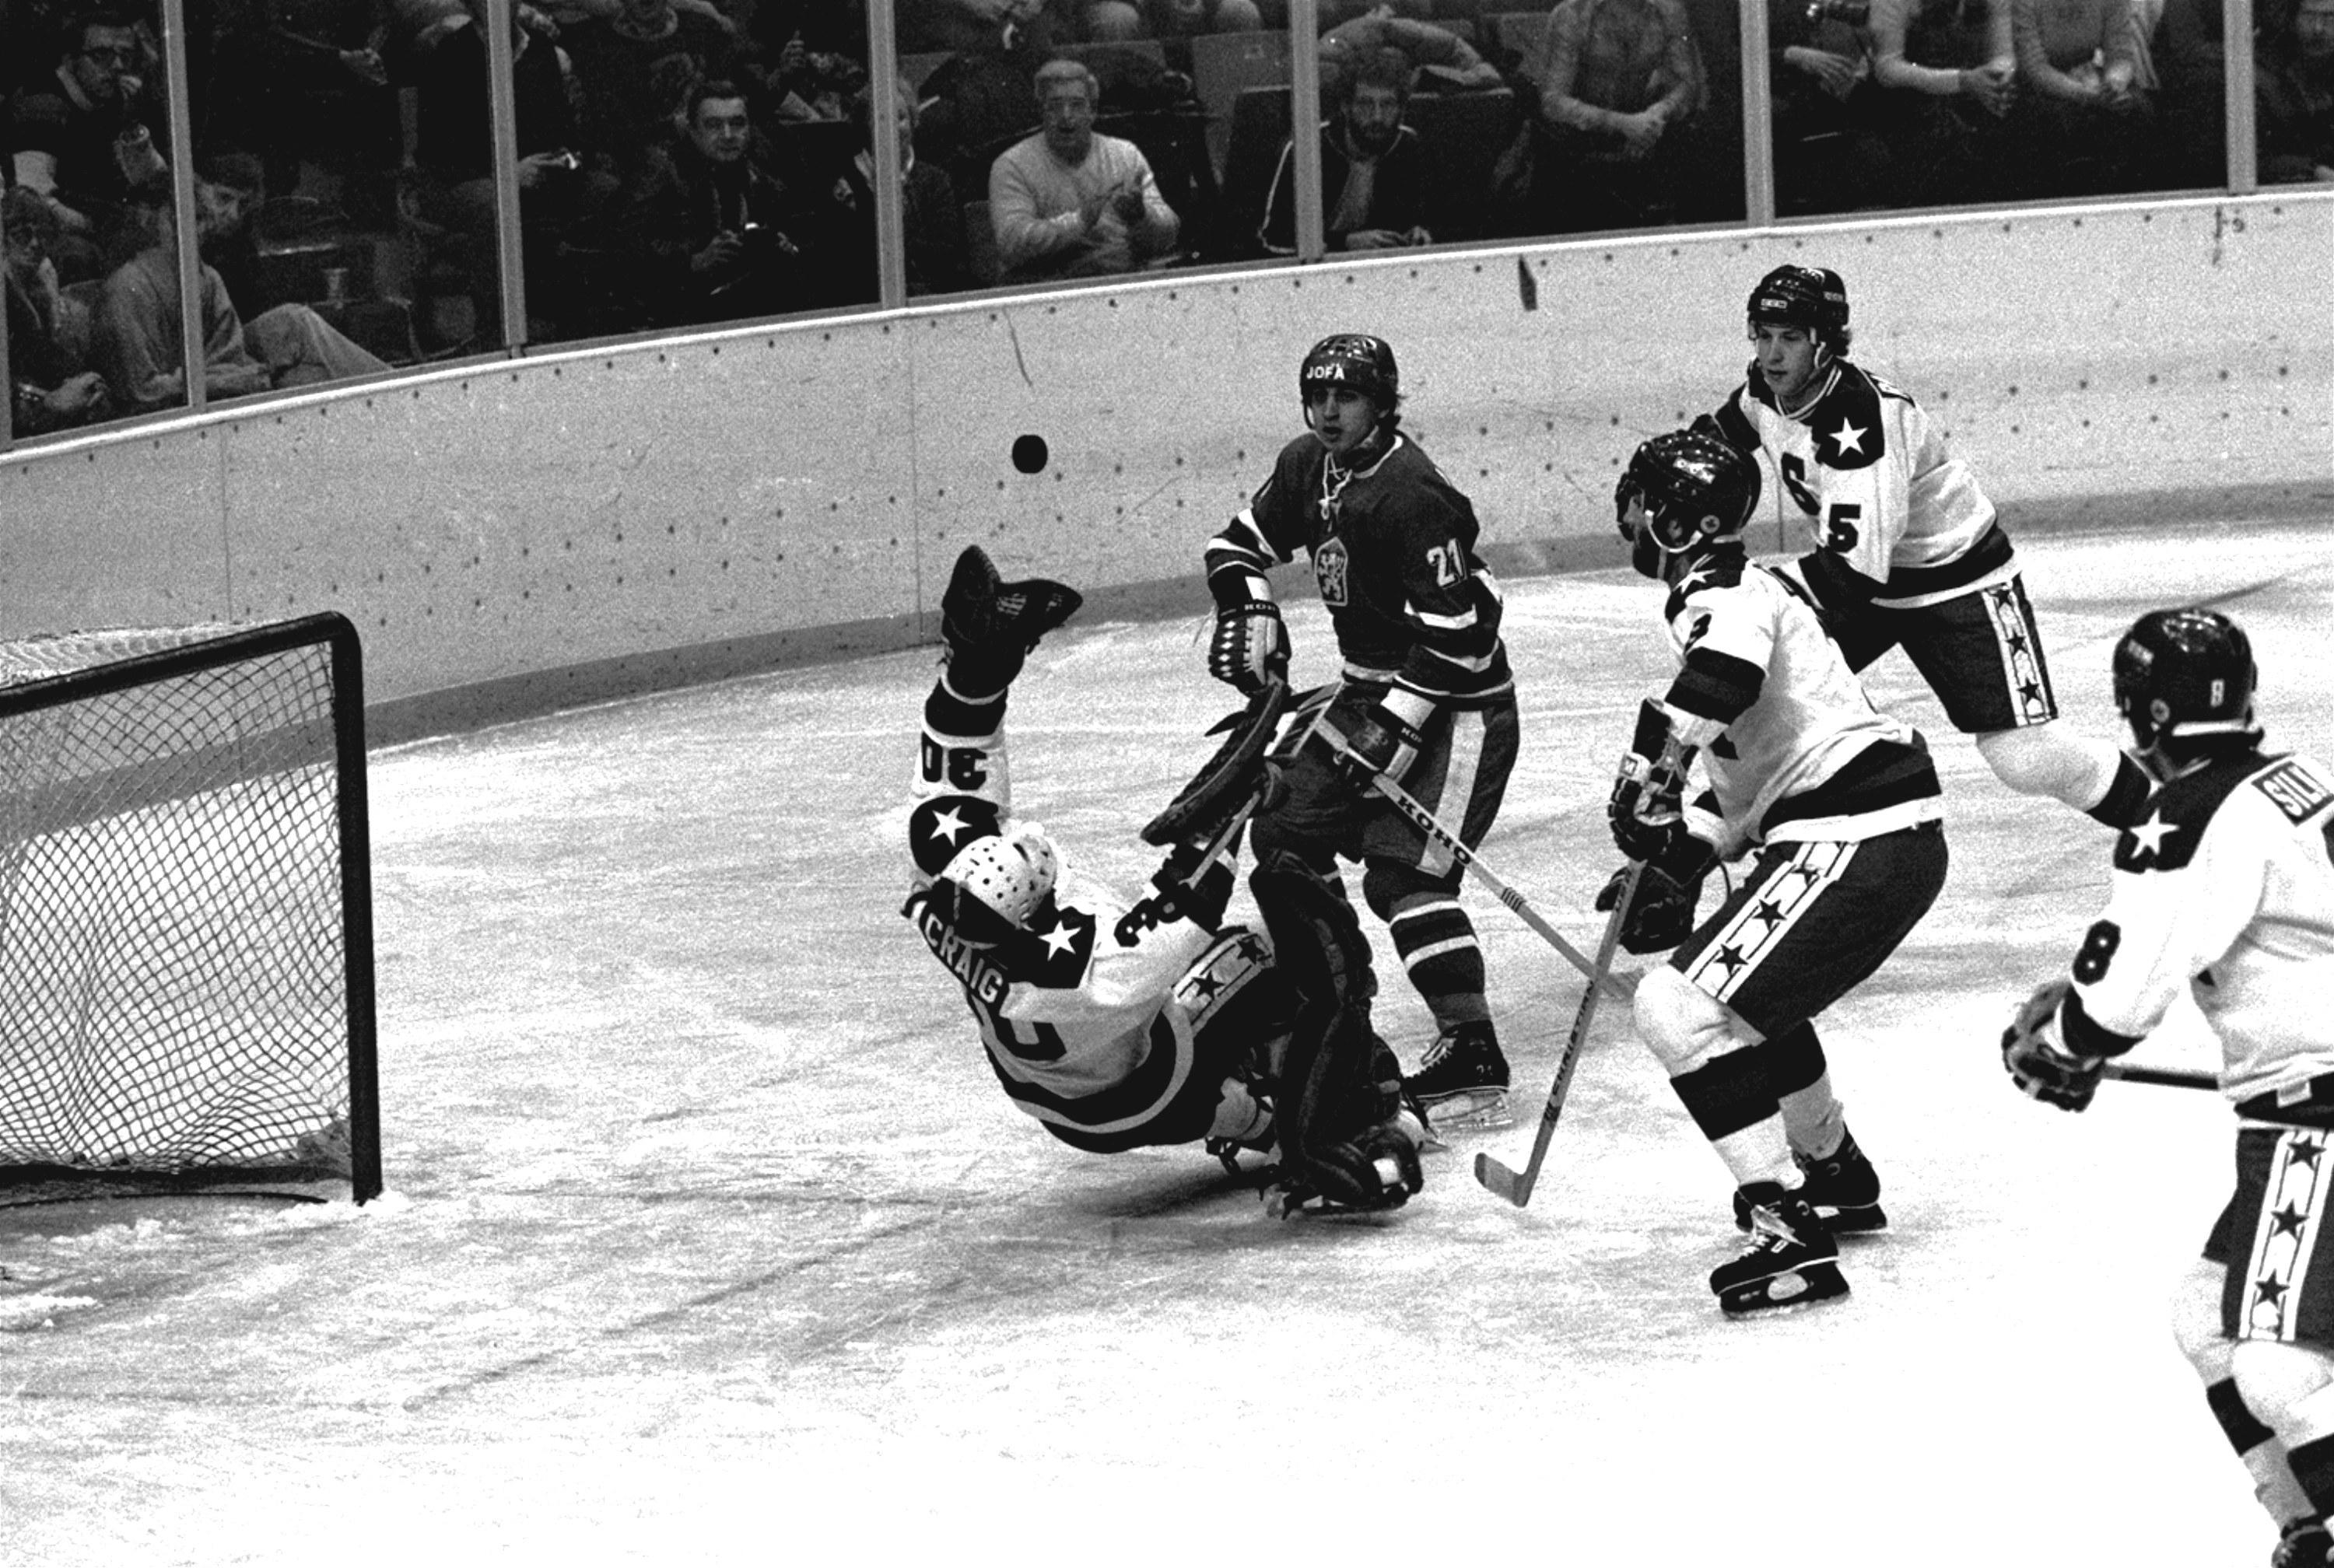 LaunchpadOne: Jim Craig, 1980 US Hockey Gold Medal Goalie, Talks